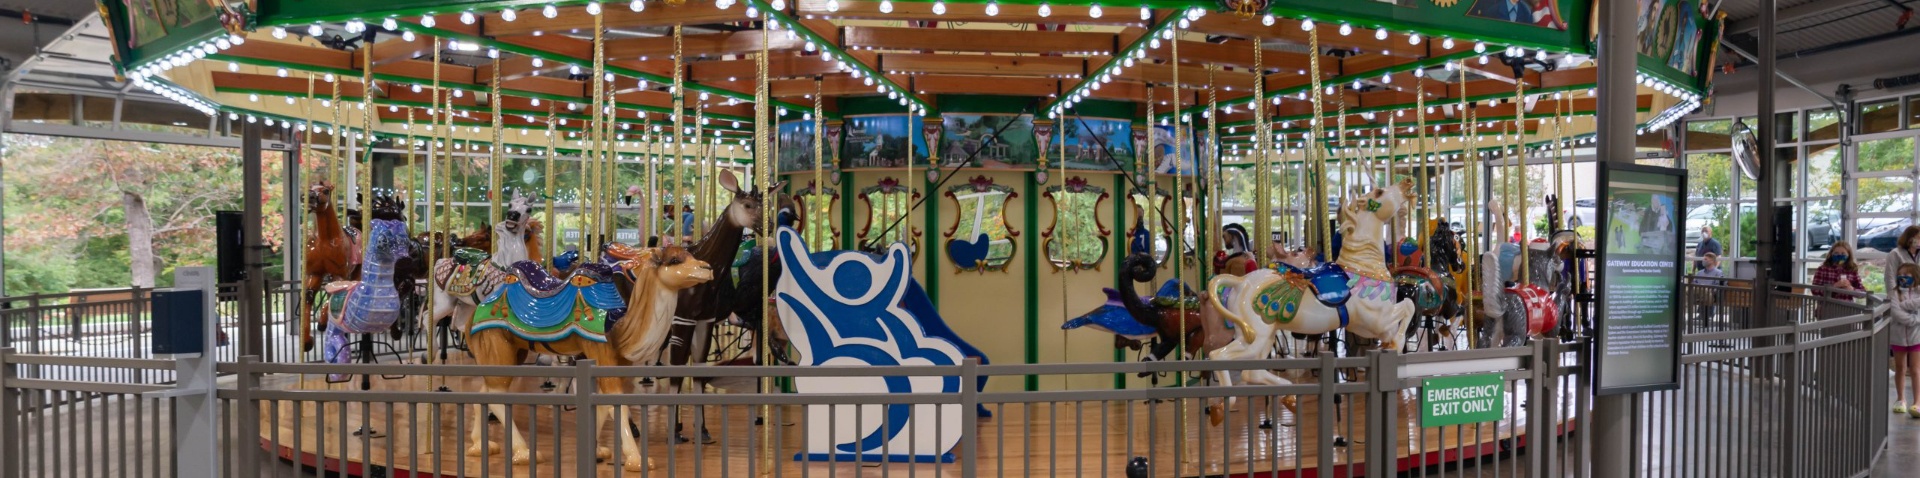 kids on carousel